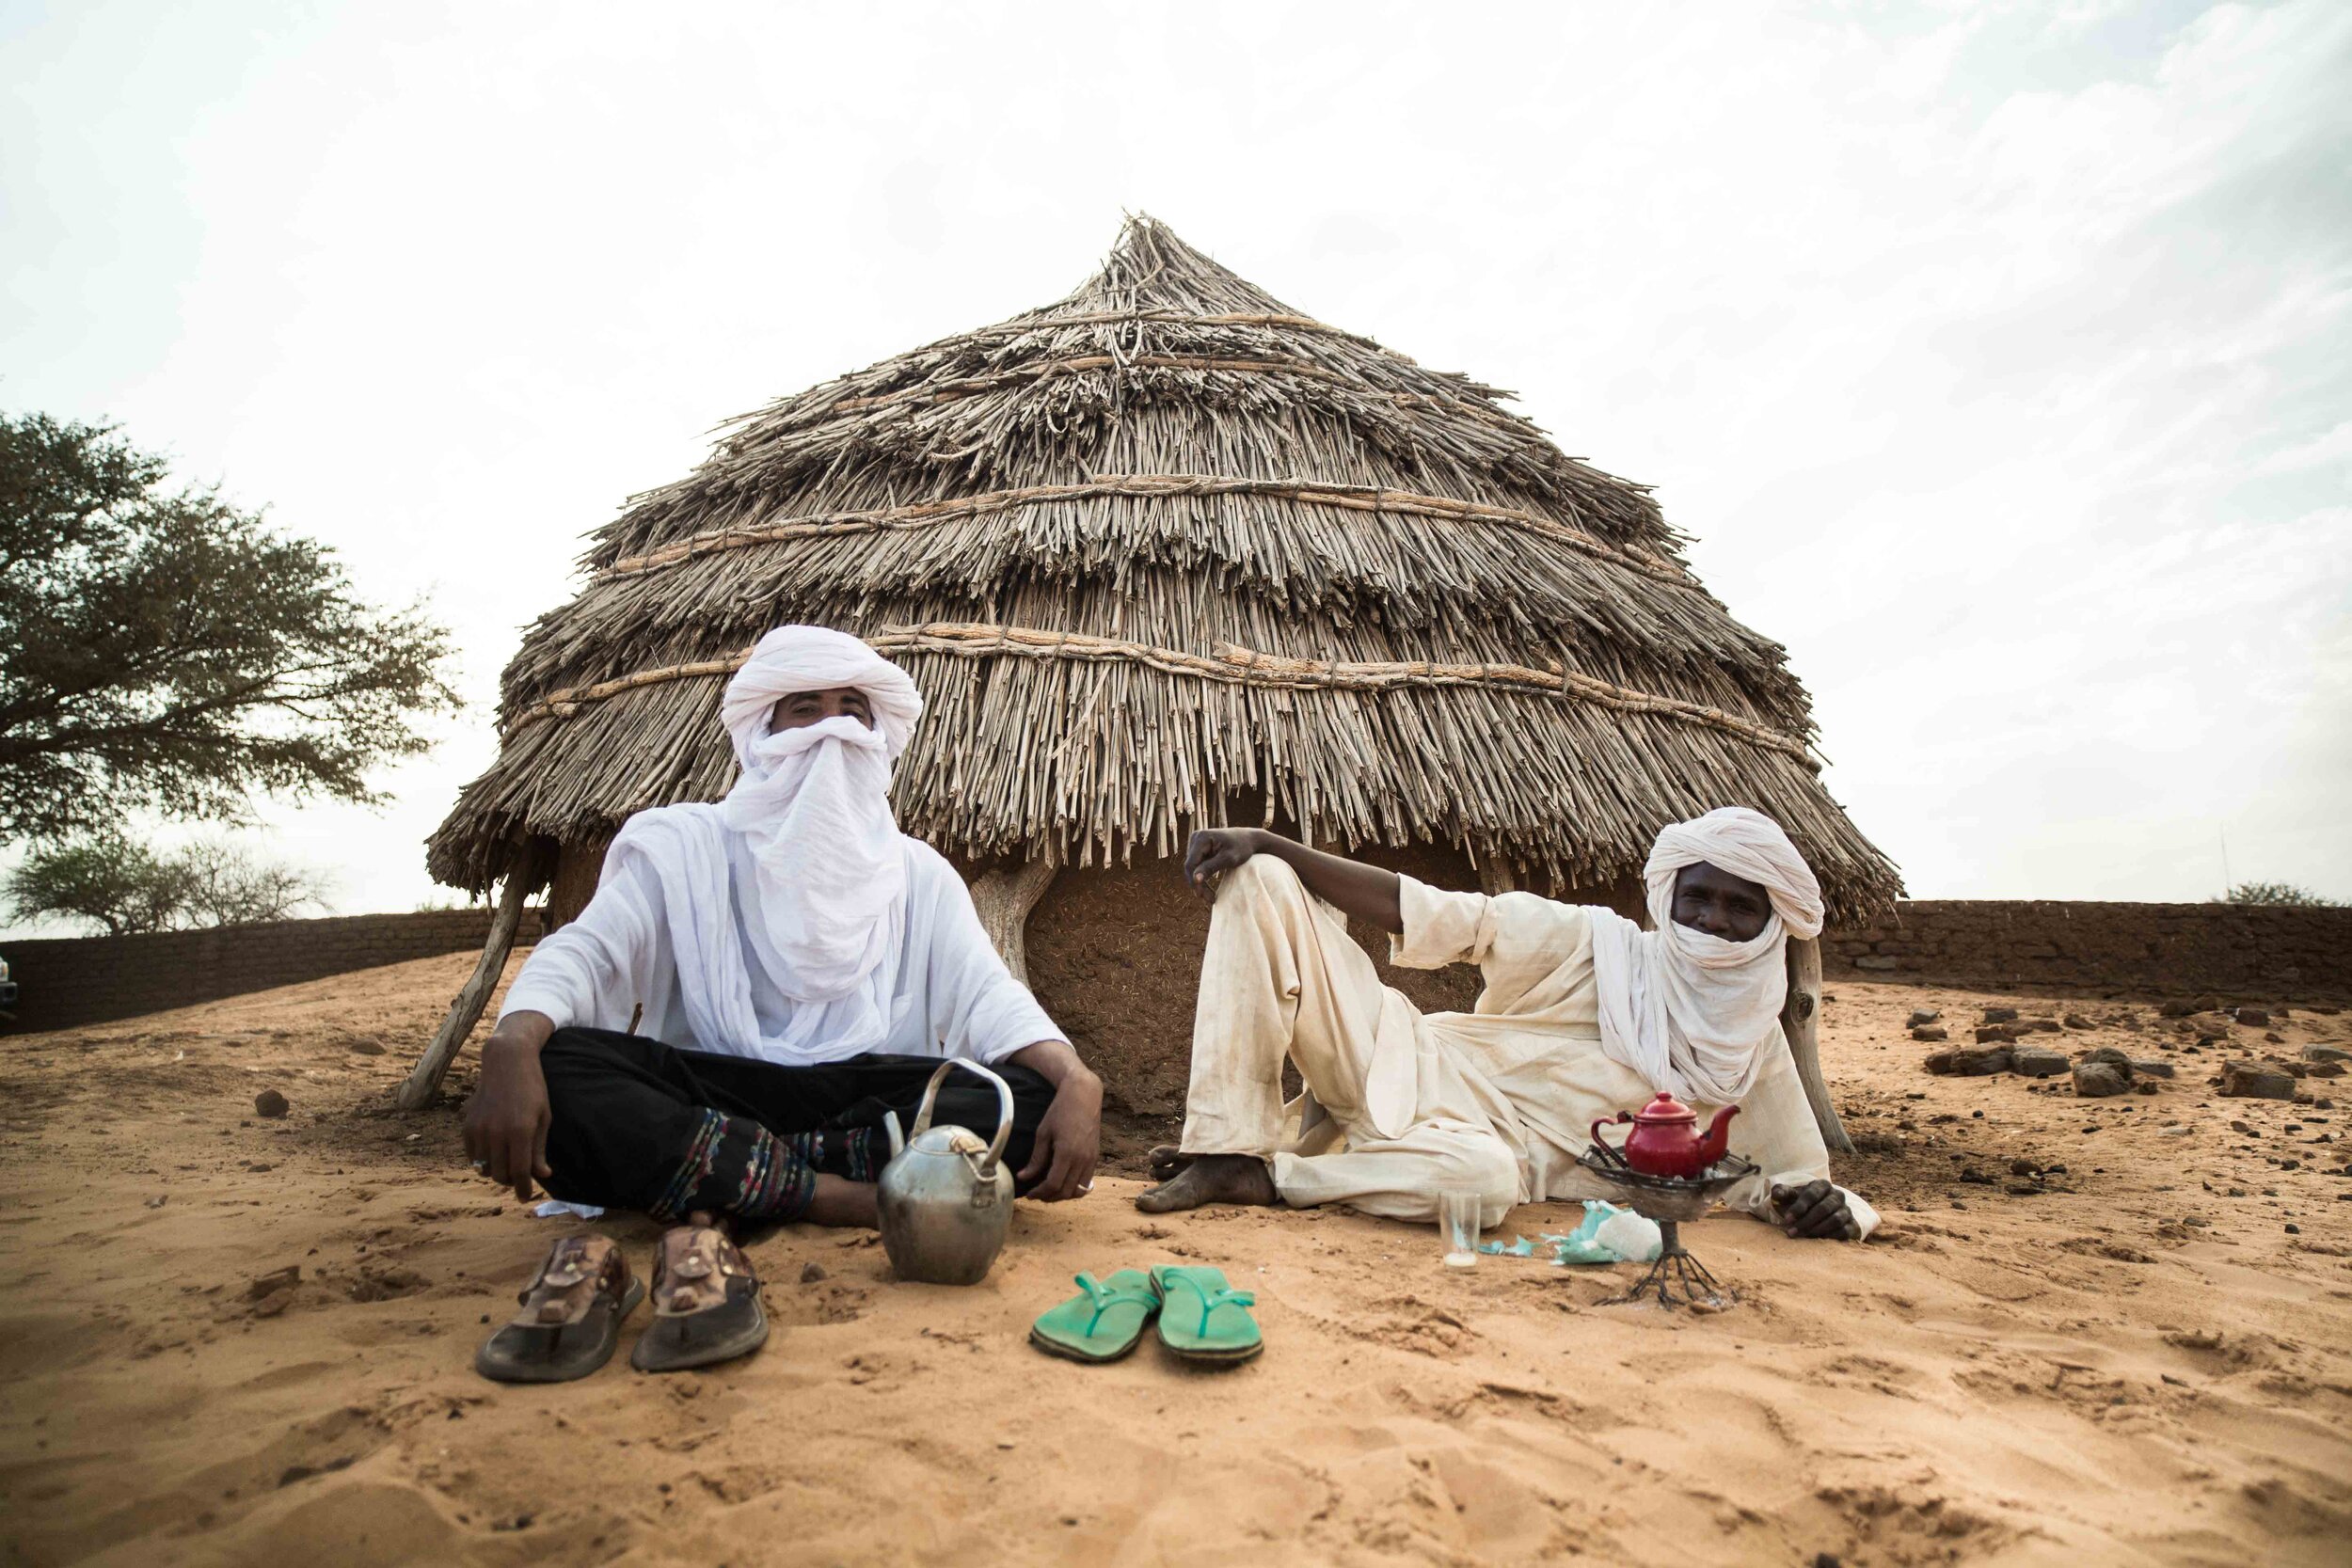  Niger, 2016 